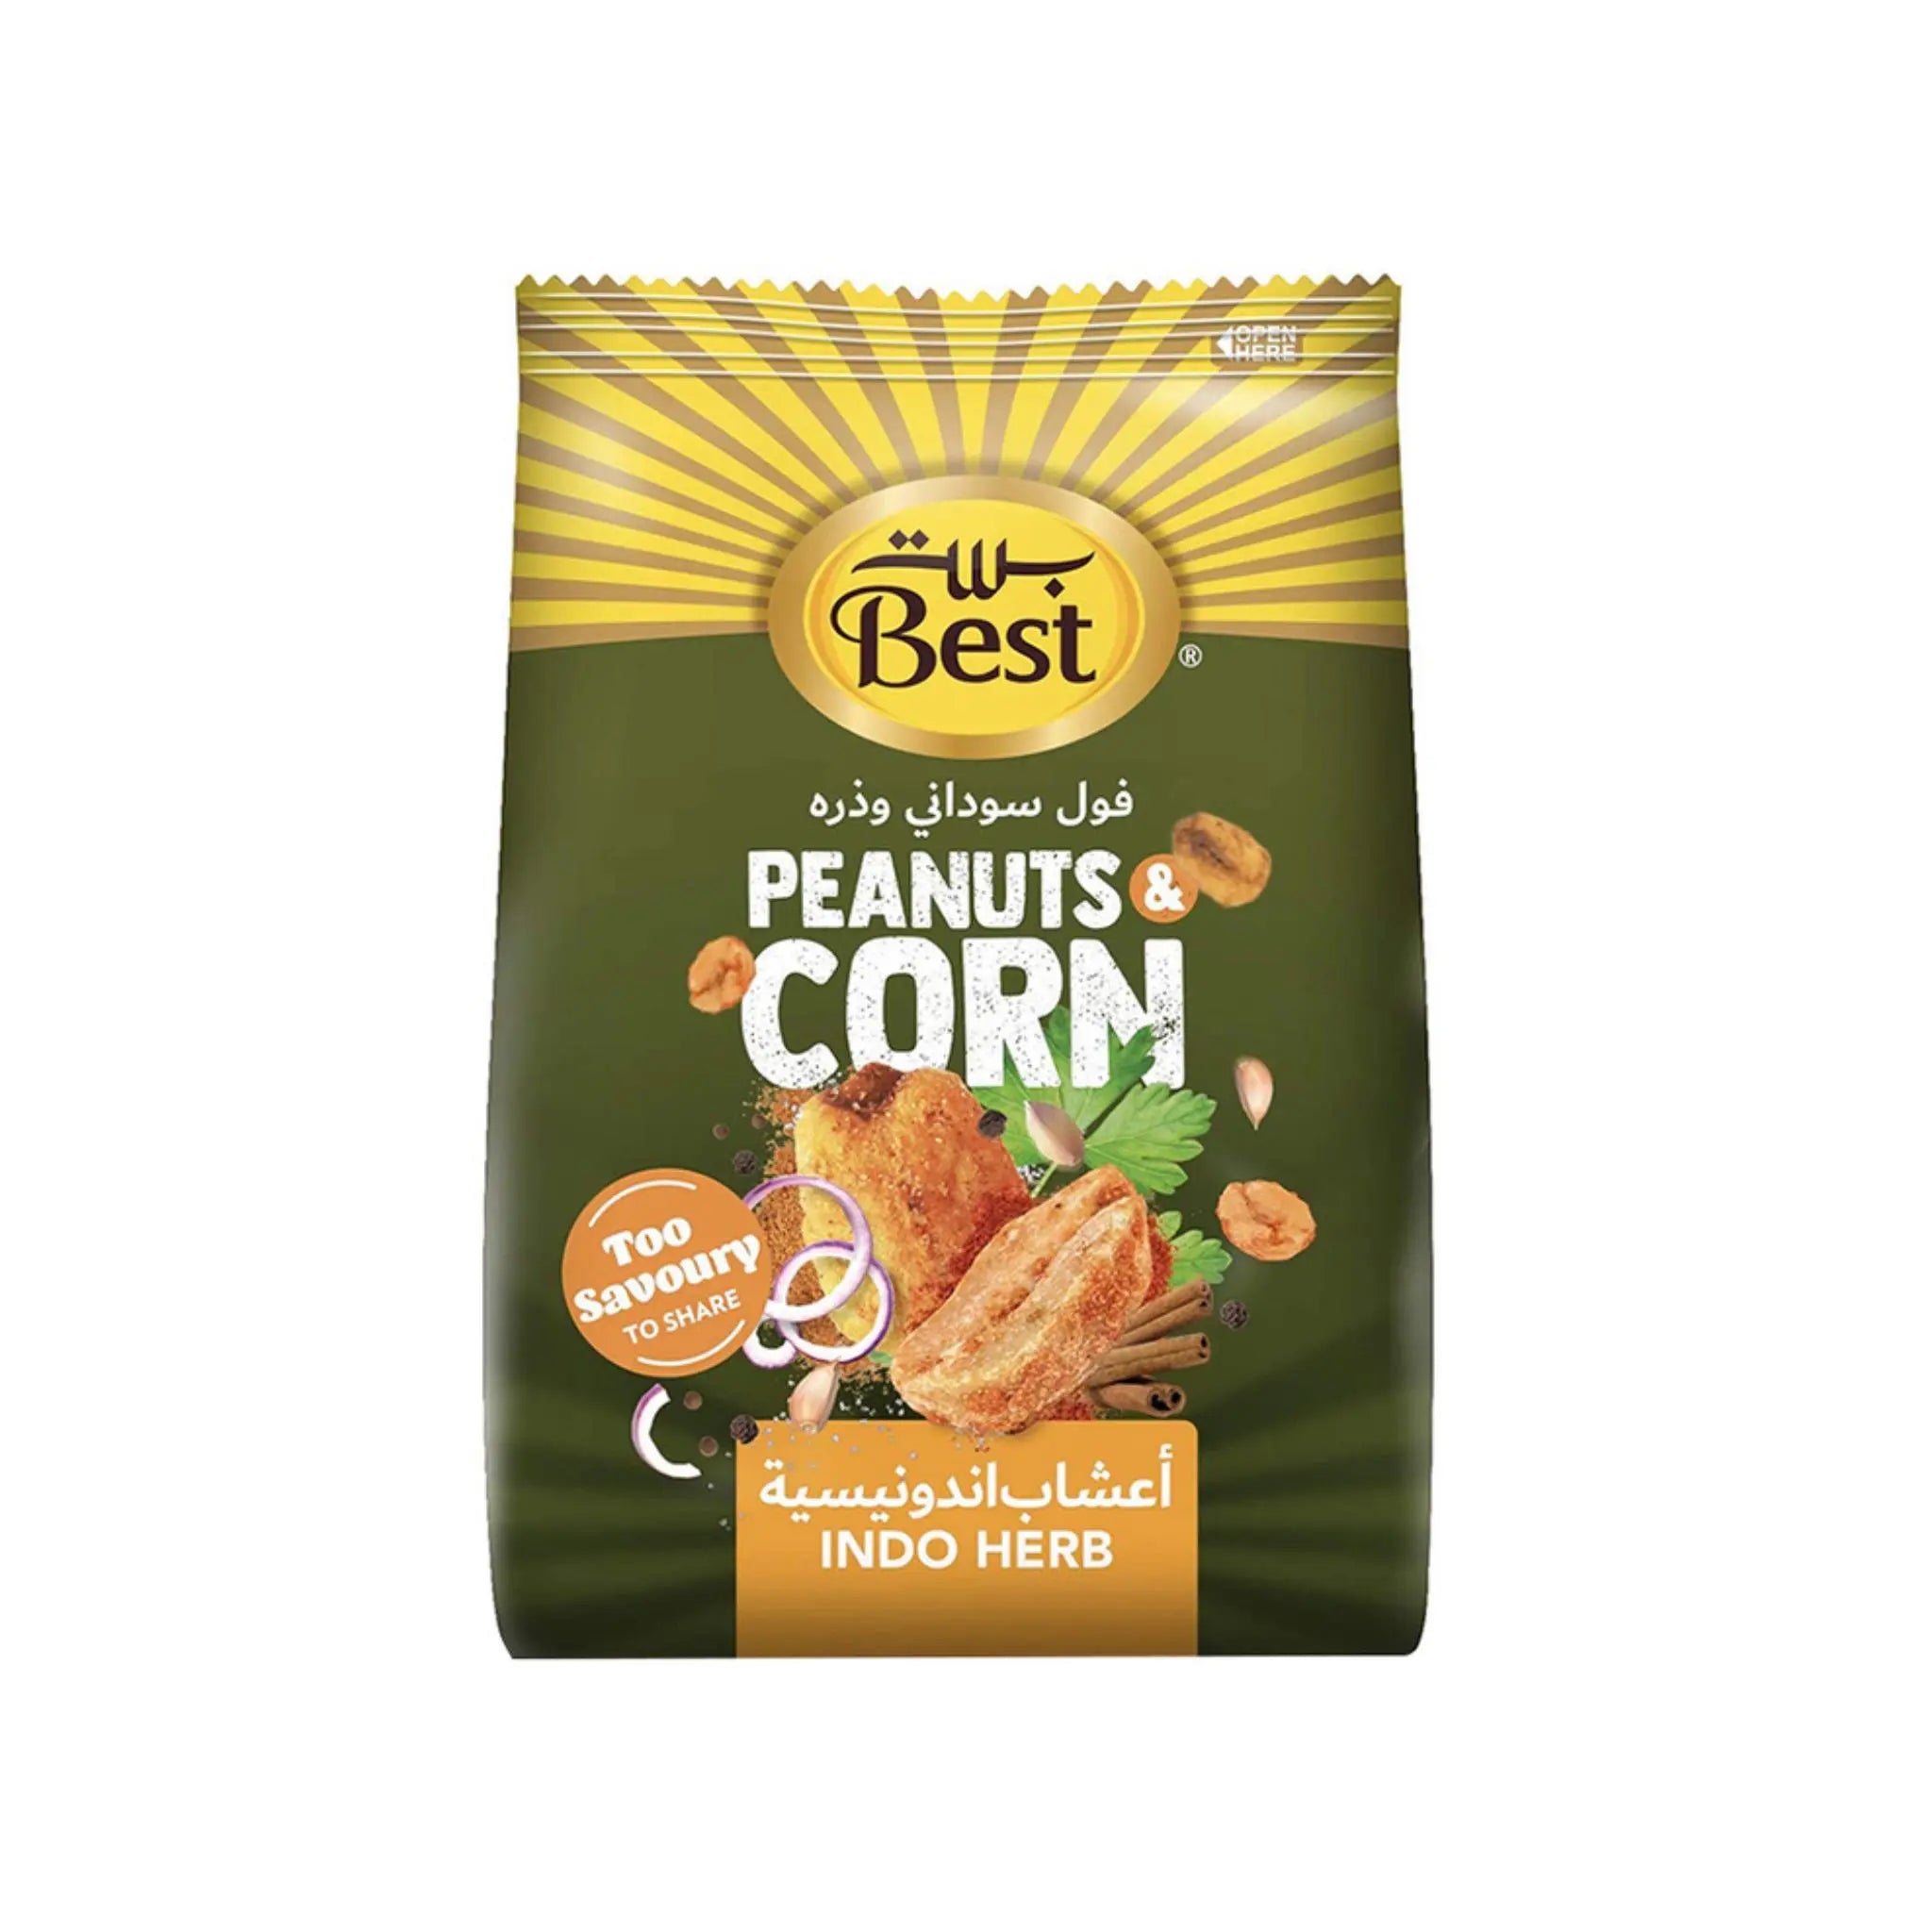 Best Peanuts & Corn Indo Herb - 24x150g (1 carton) - Marino.AE